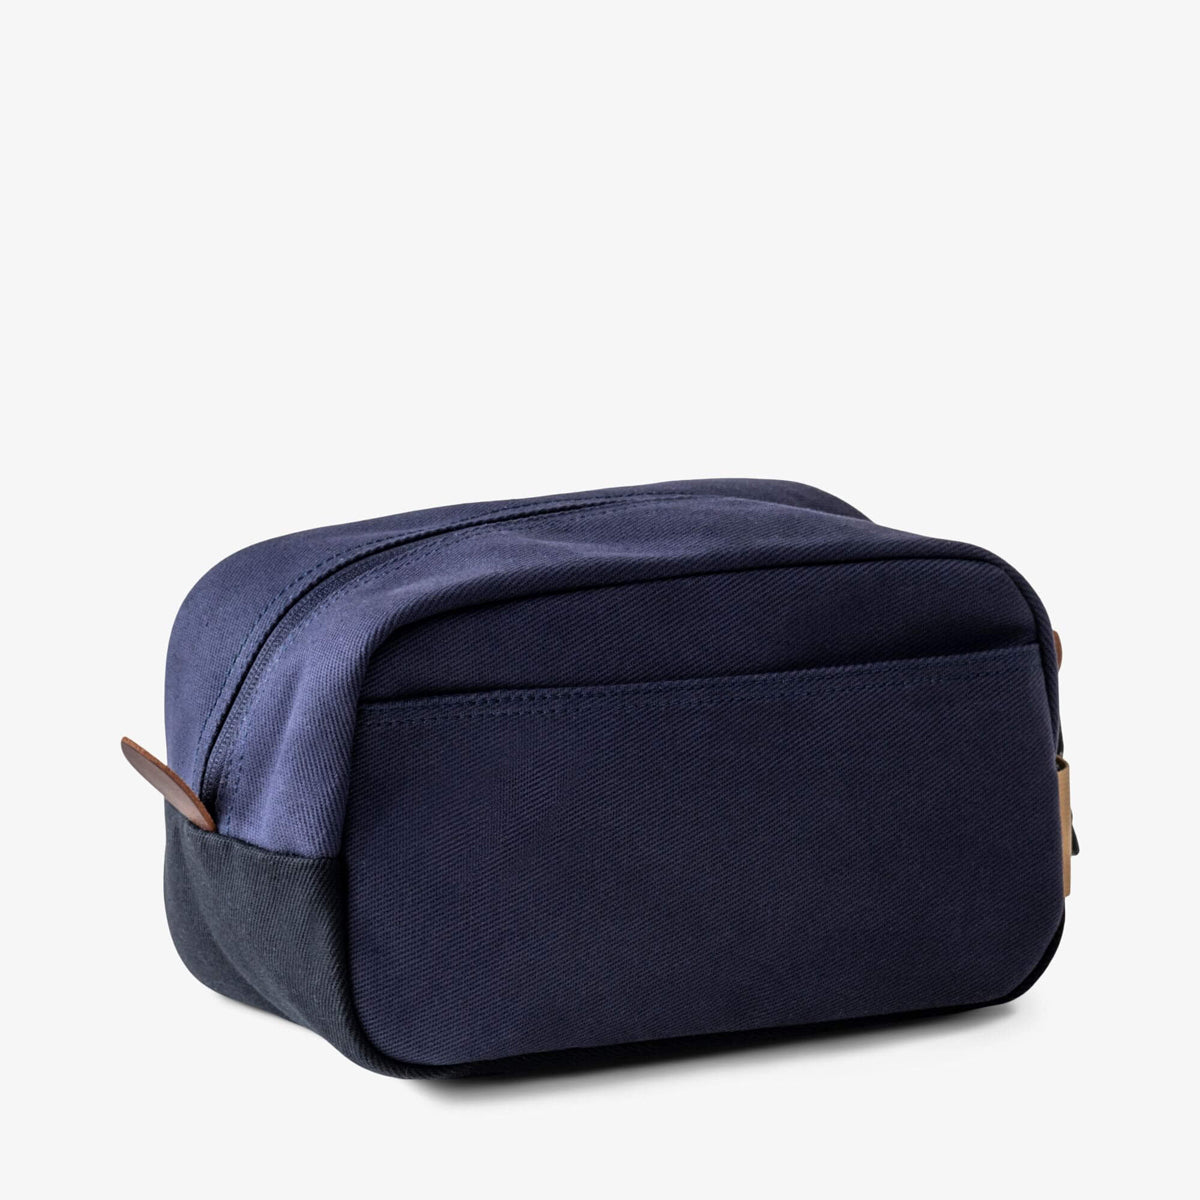 Langly : Weekender Kit Bag : Navy